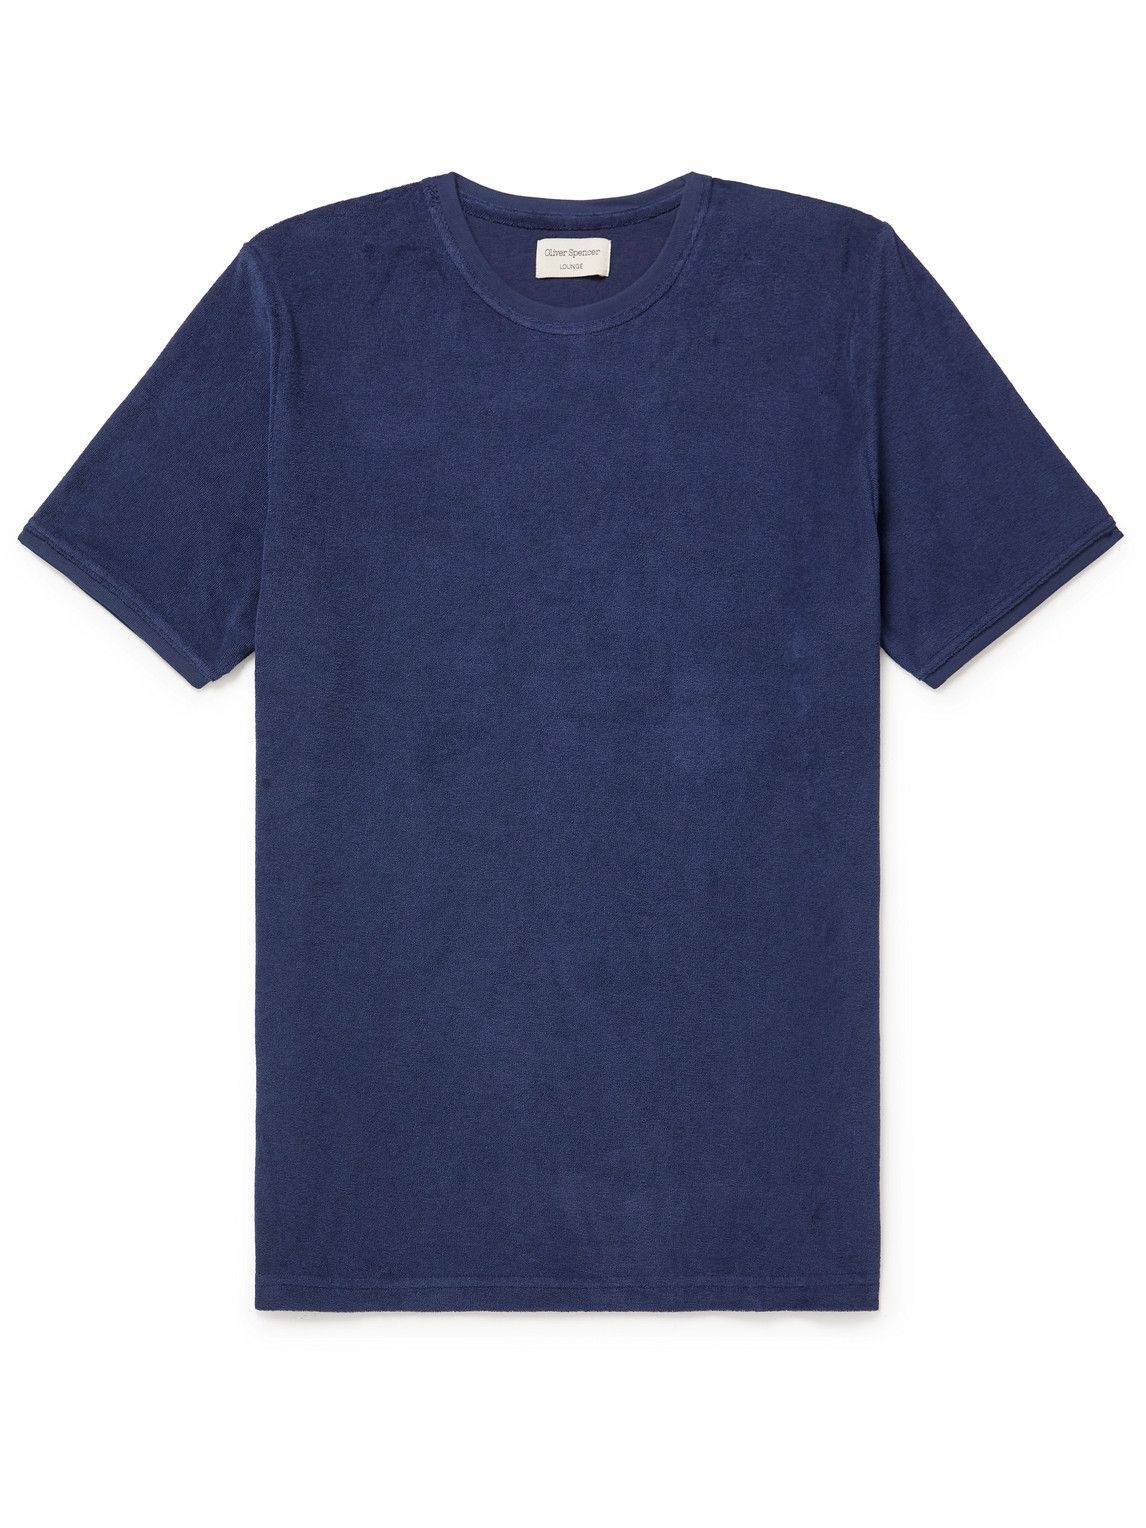 Photo: Oliver Spencer Loungewear - Ashbourne Cotton-Blend Terry T-Shirt - Blue